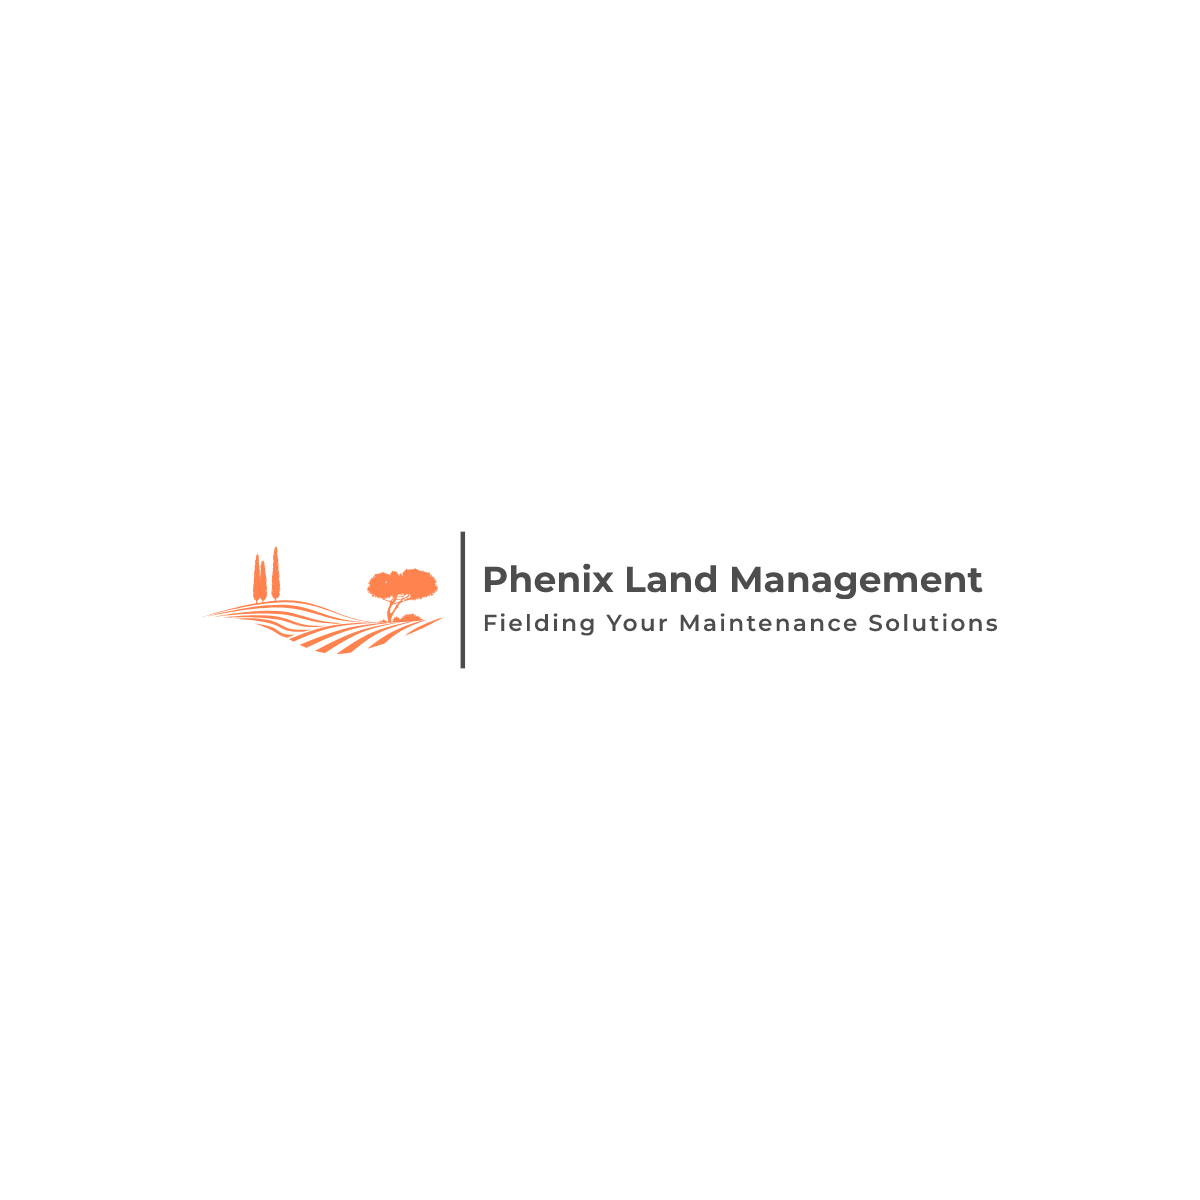 Phenix Land Management